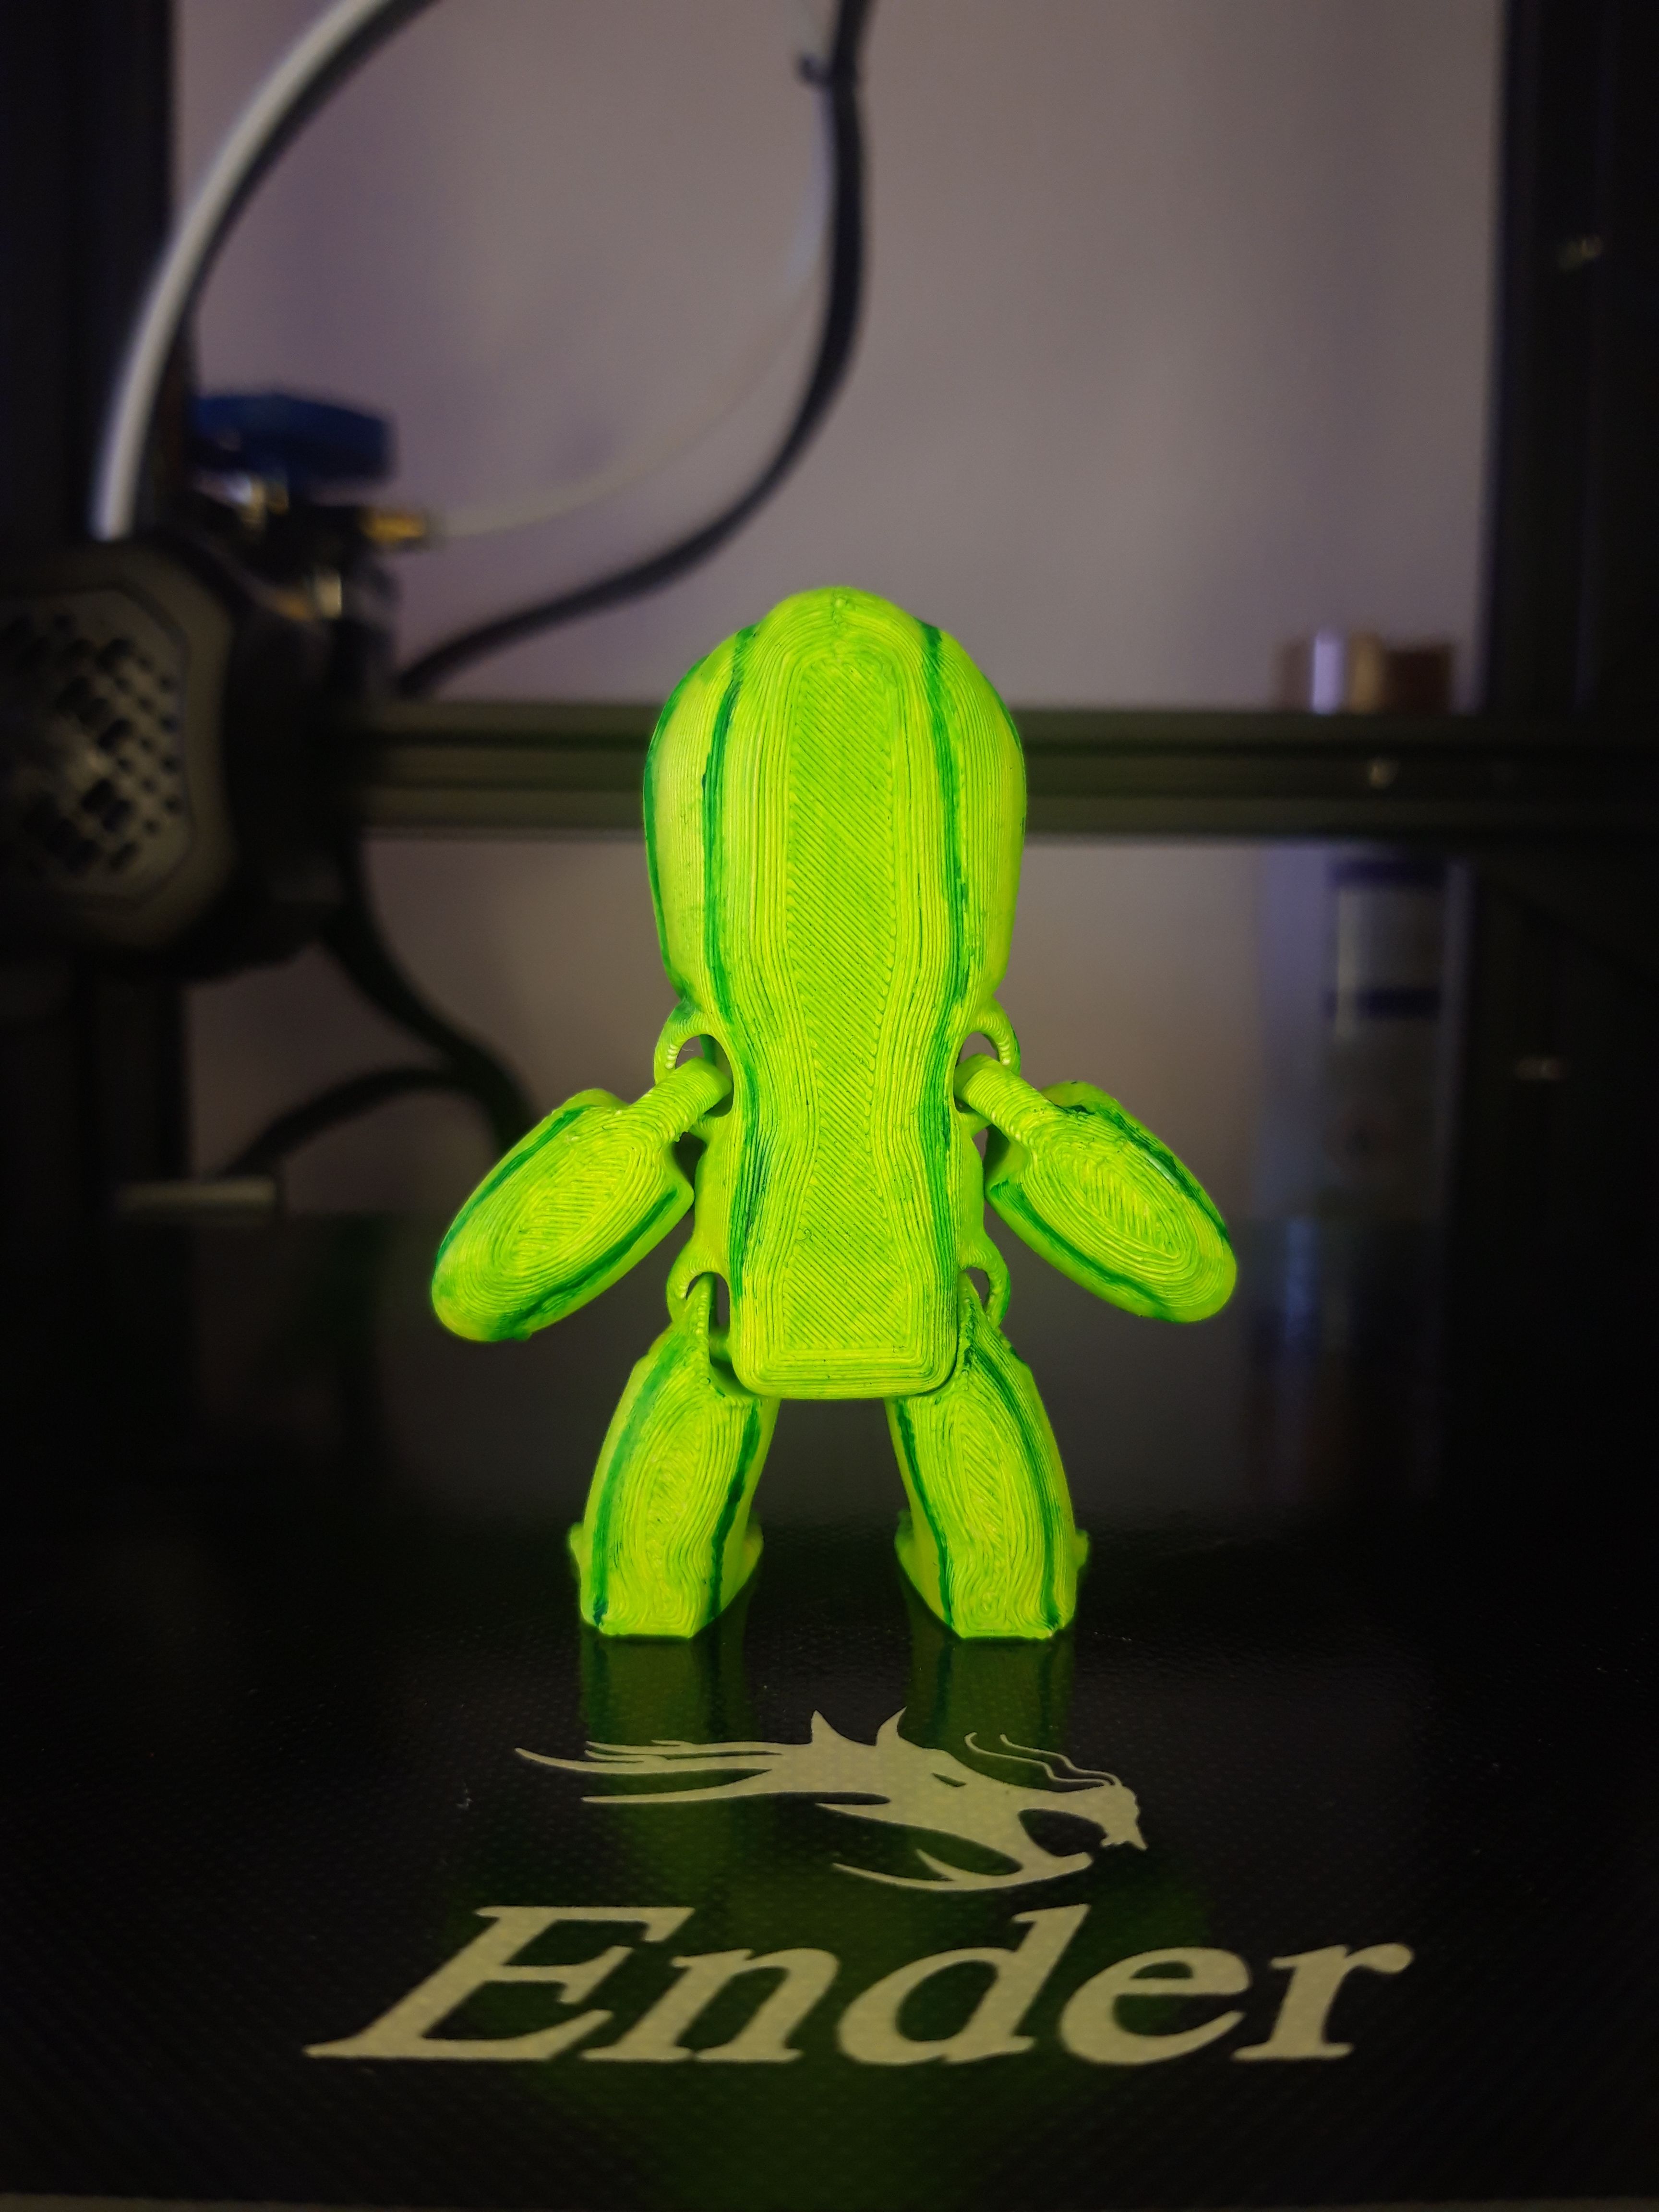 20220512_105428.jpg Download STL file Articulated Monster Cactus • 3D printer design, RubensVisions